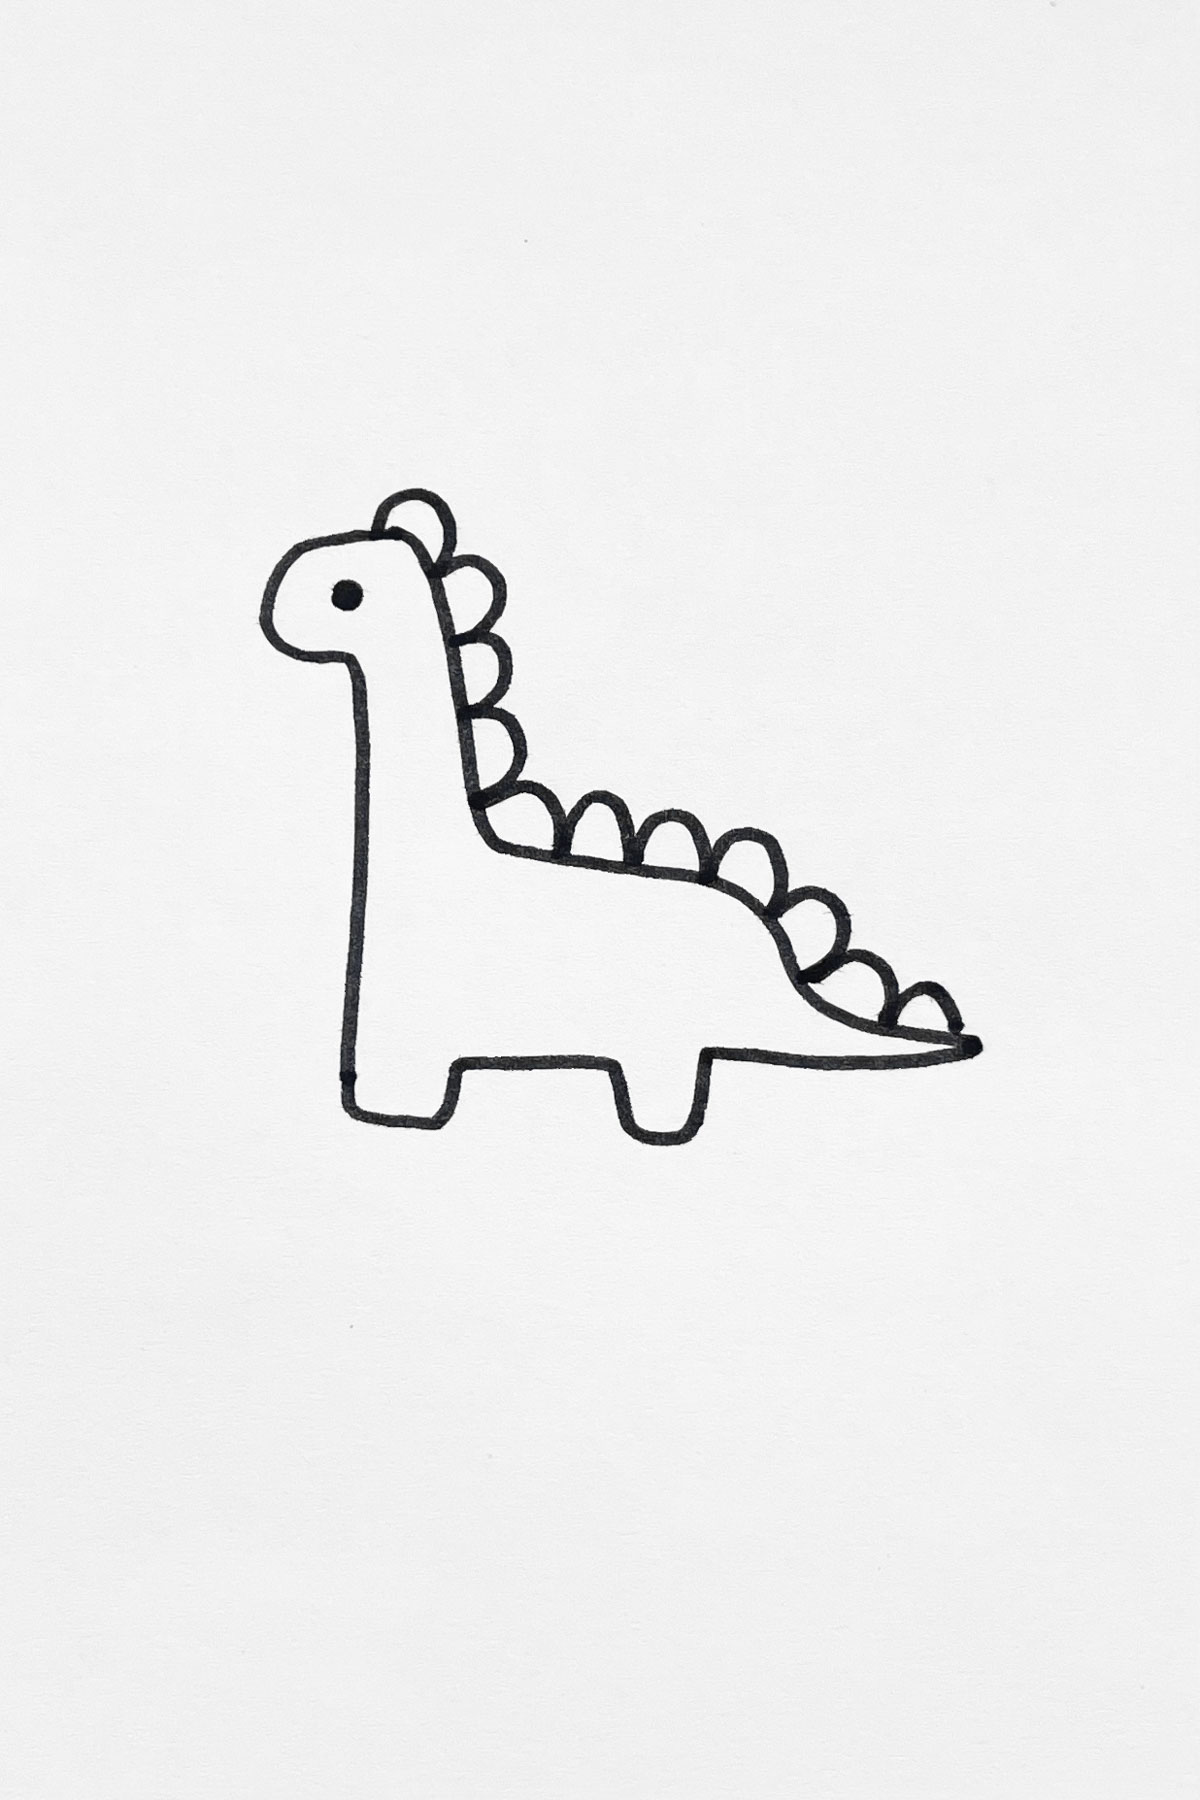 Stuffed Toy Dinosaur drawing